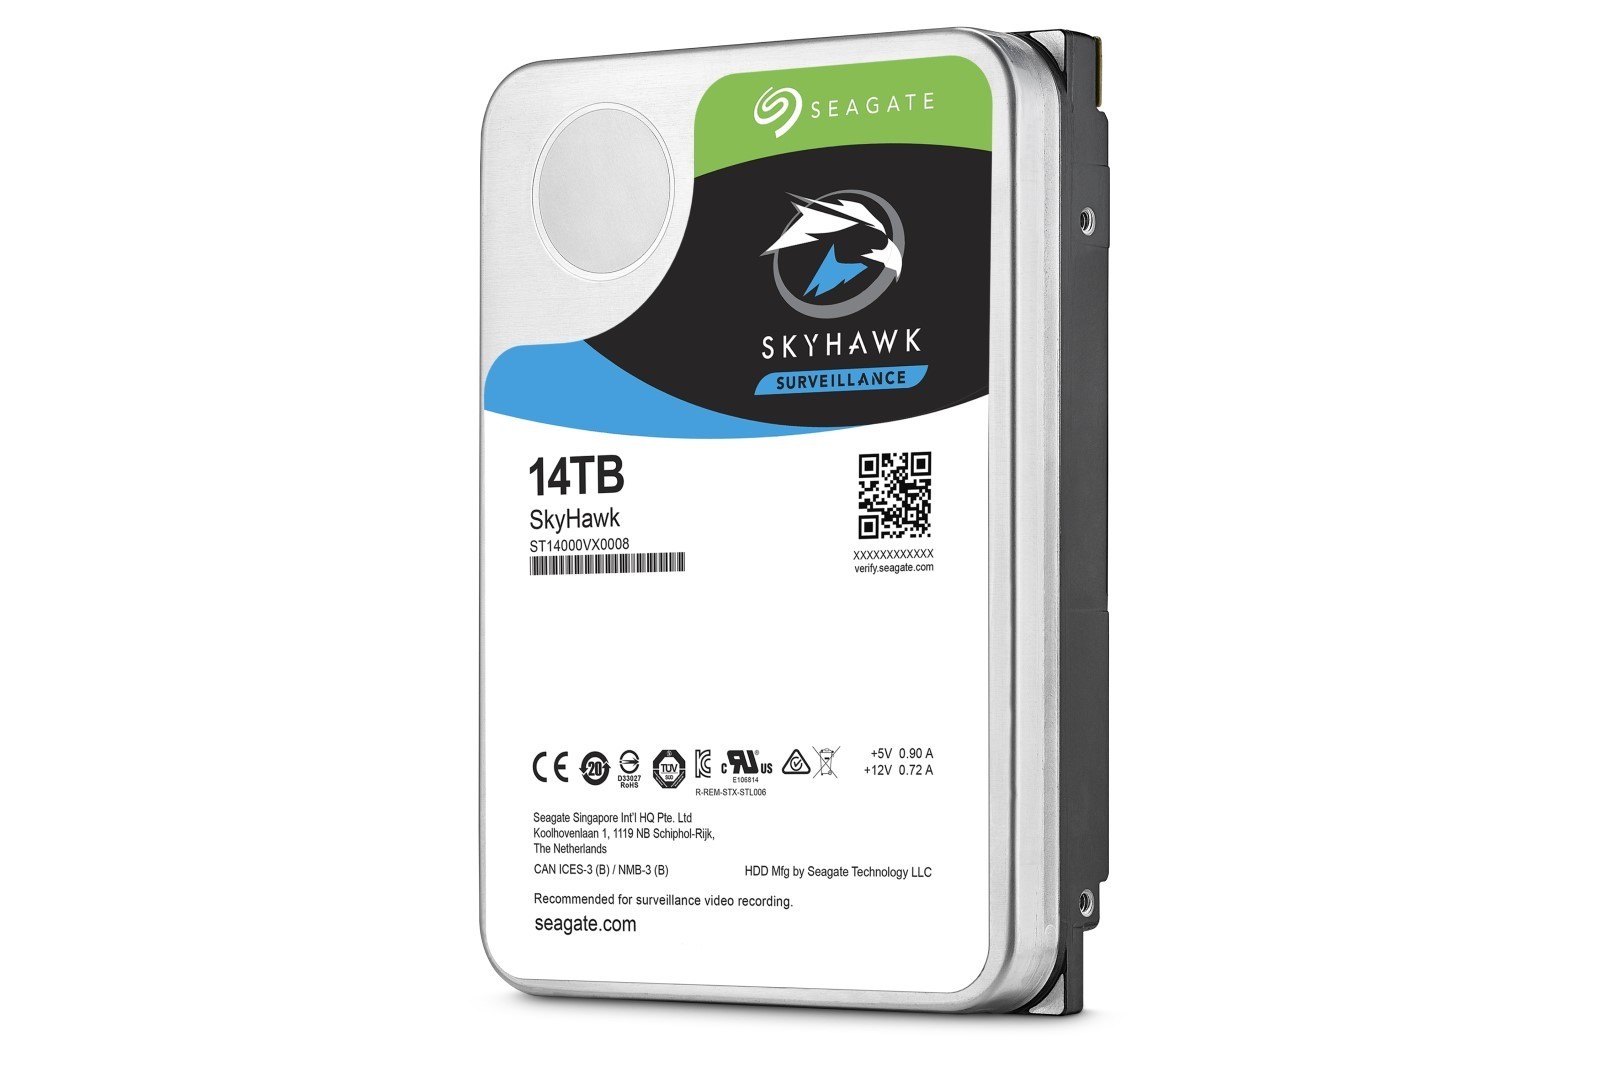 Seagate SkyHawk 14TB hard drive review: Fast, surveillance-optimized storage